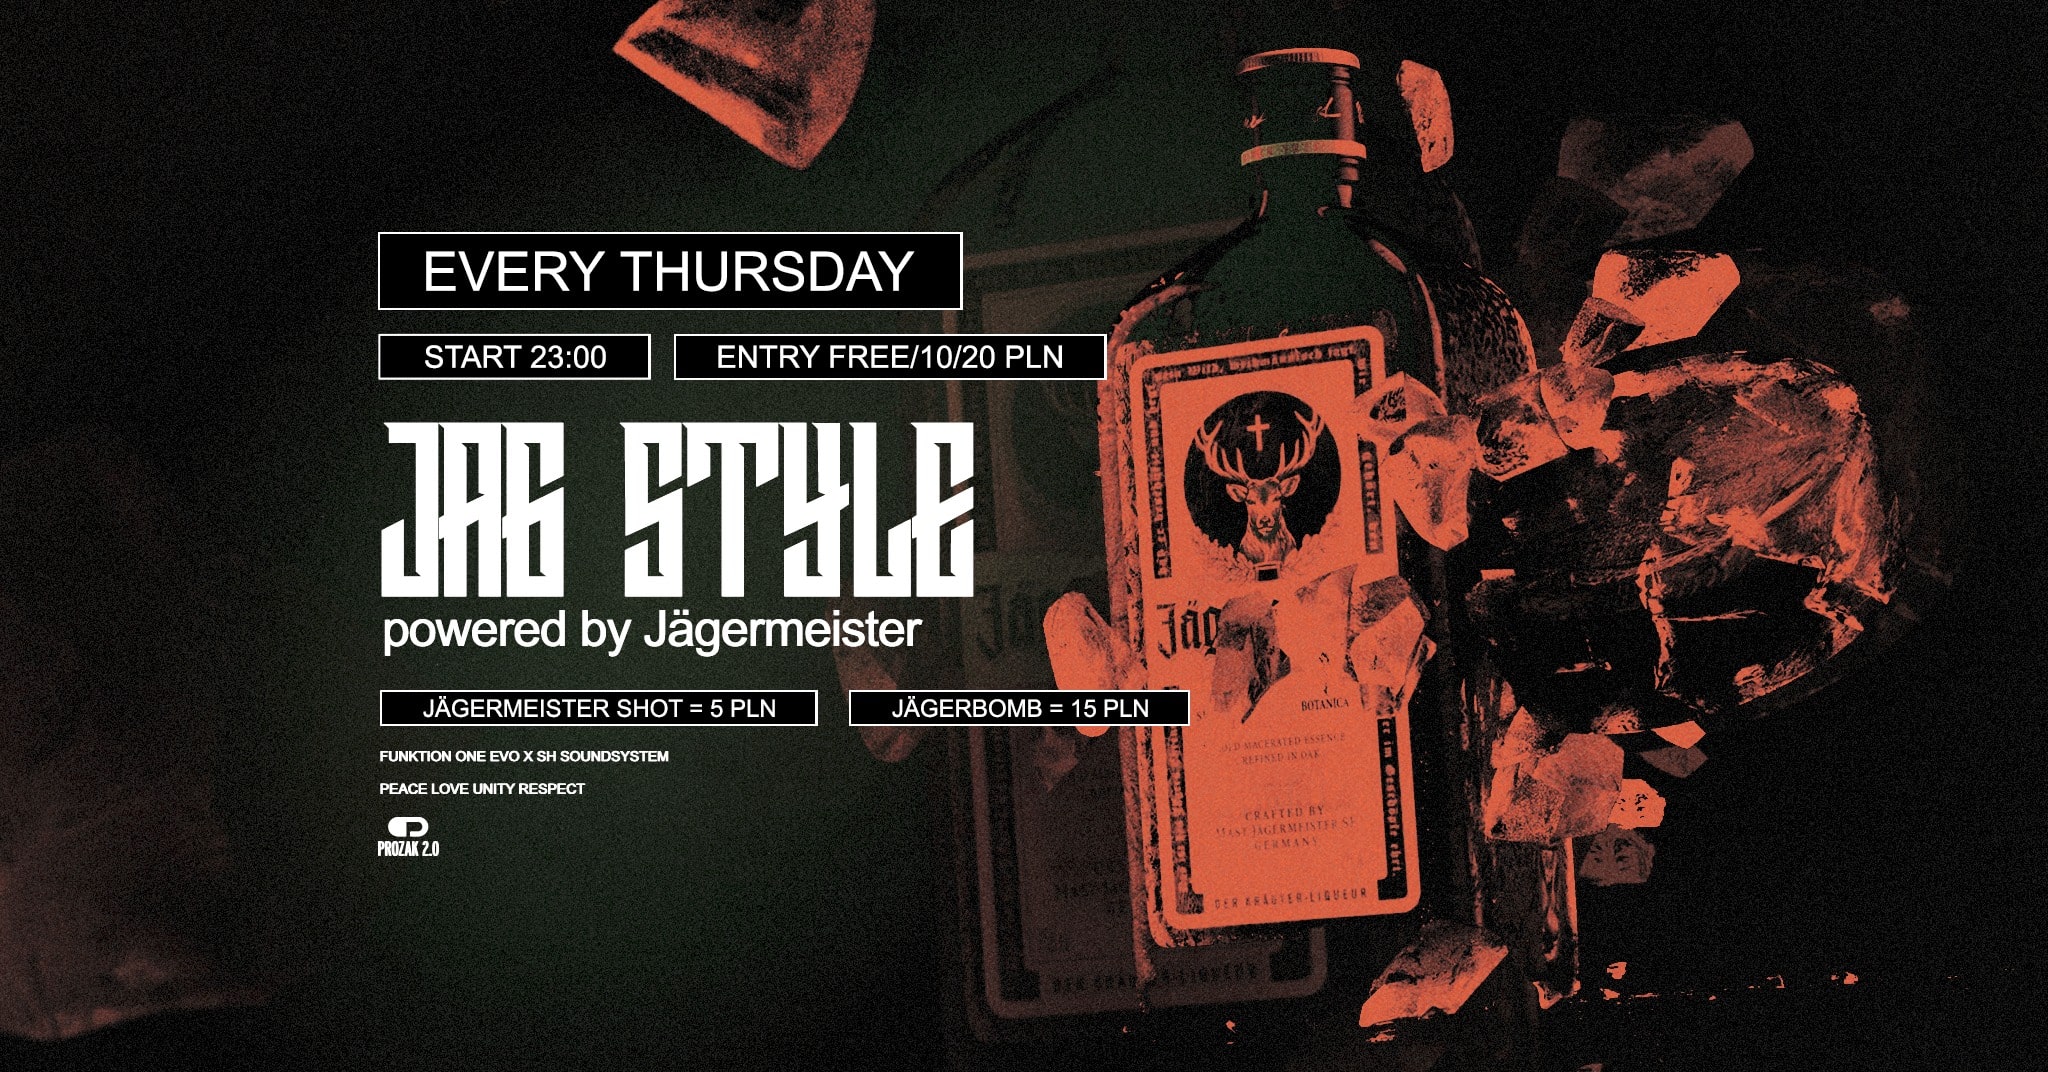 Jäg Style – Every Thursday at Prozak 2.0